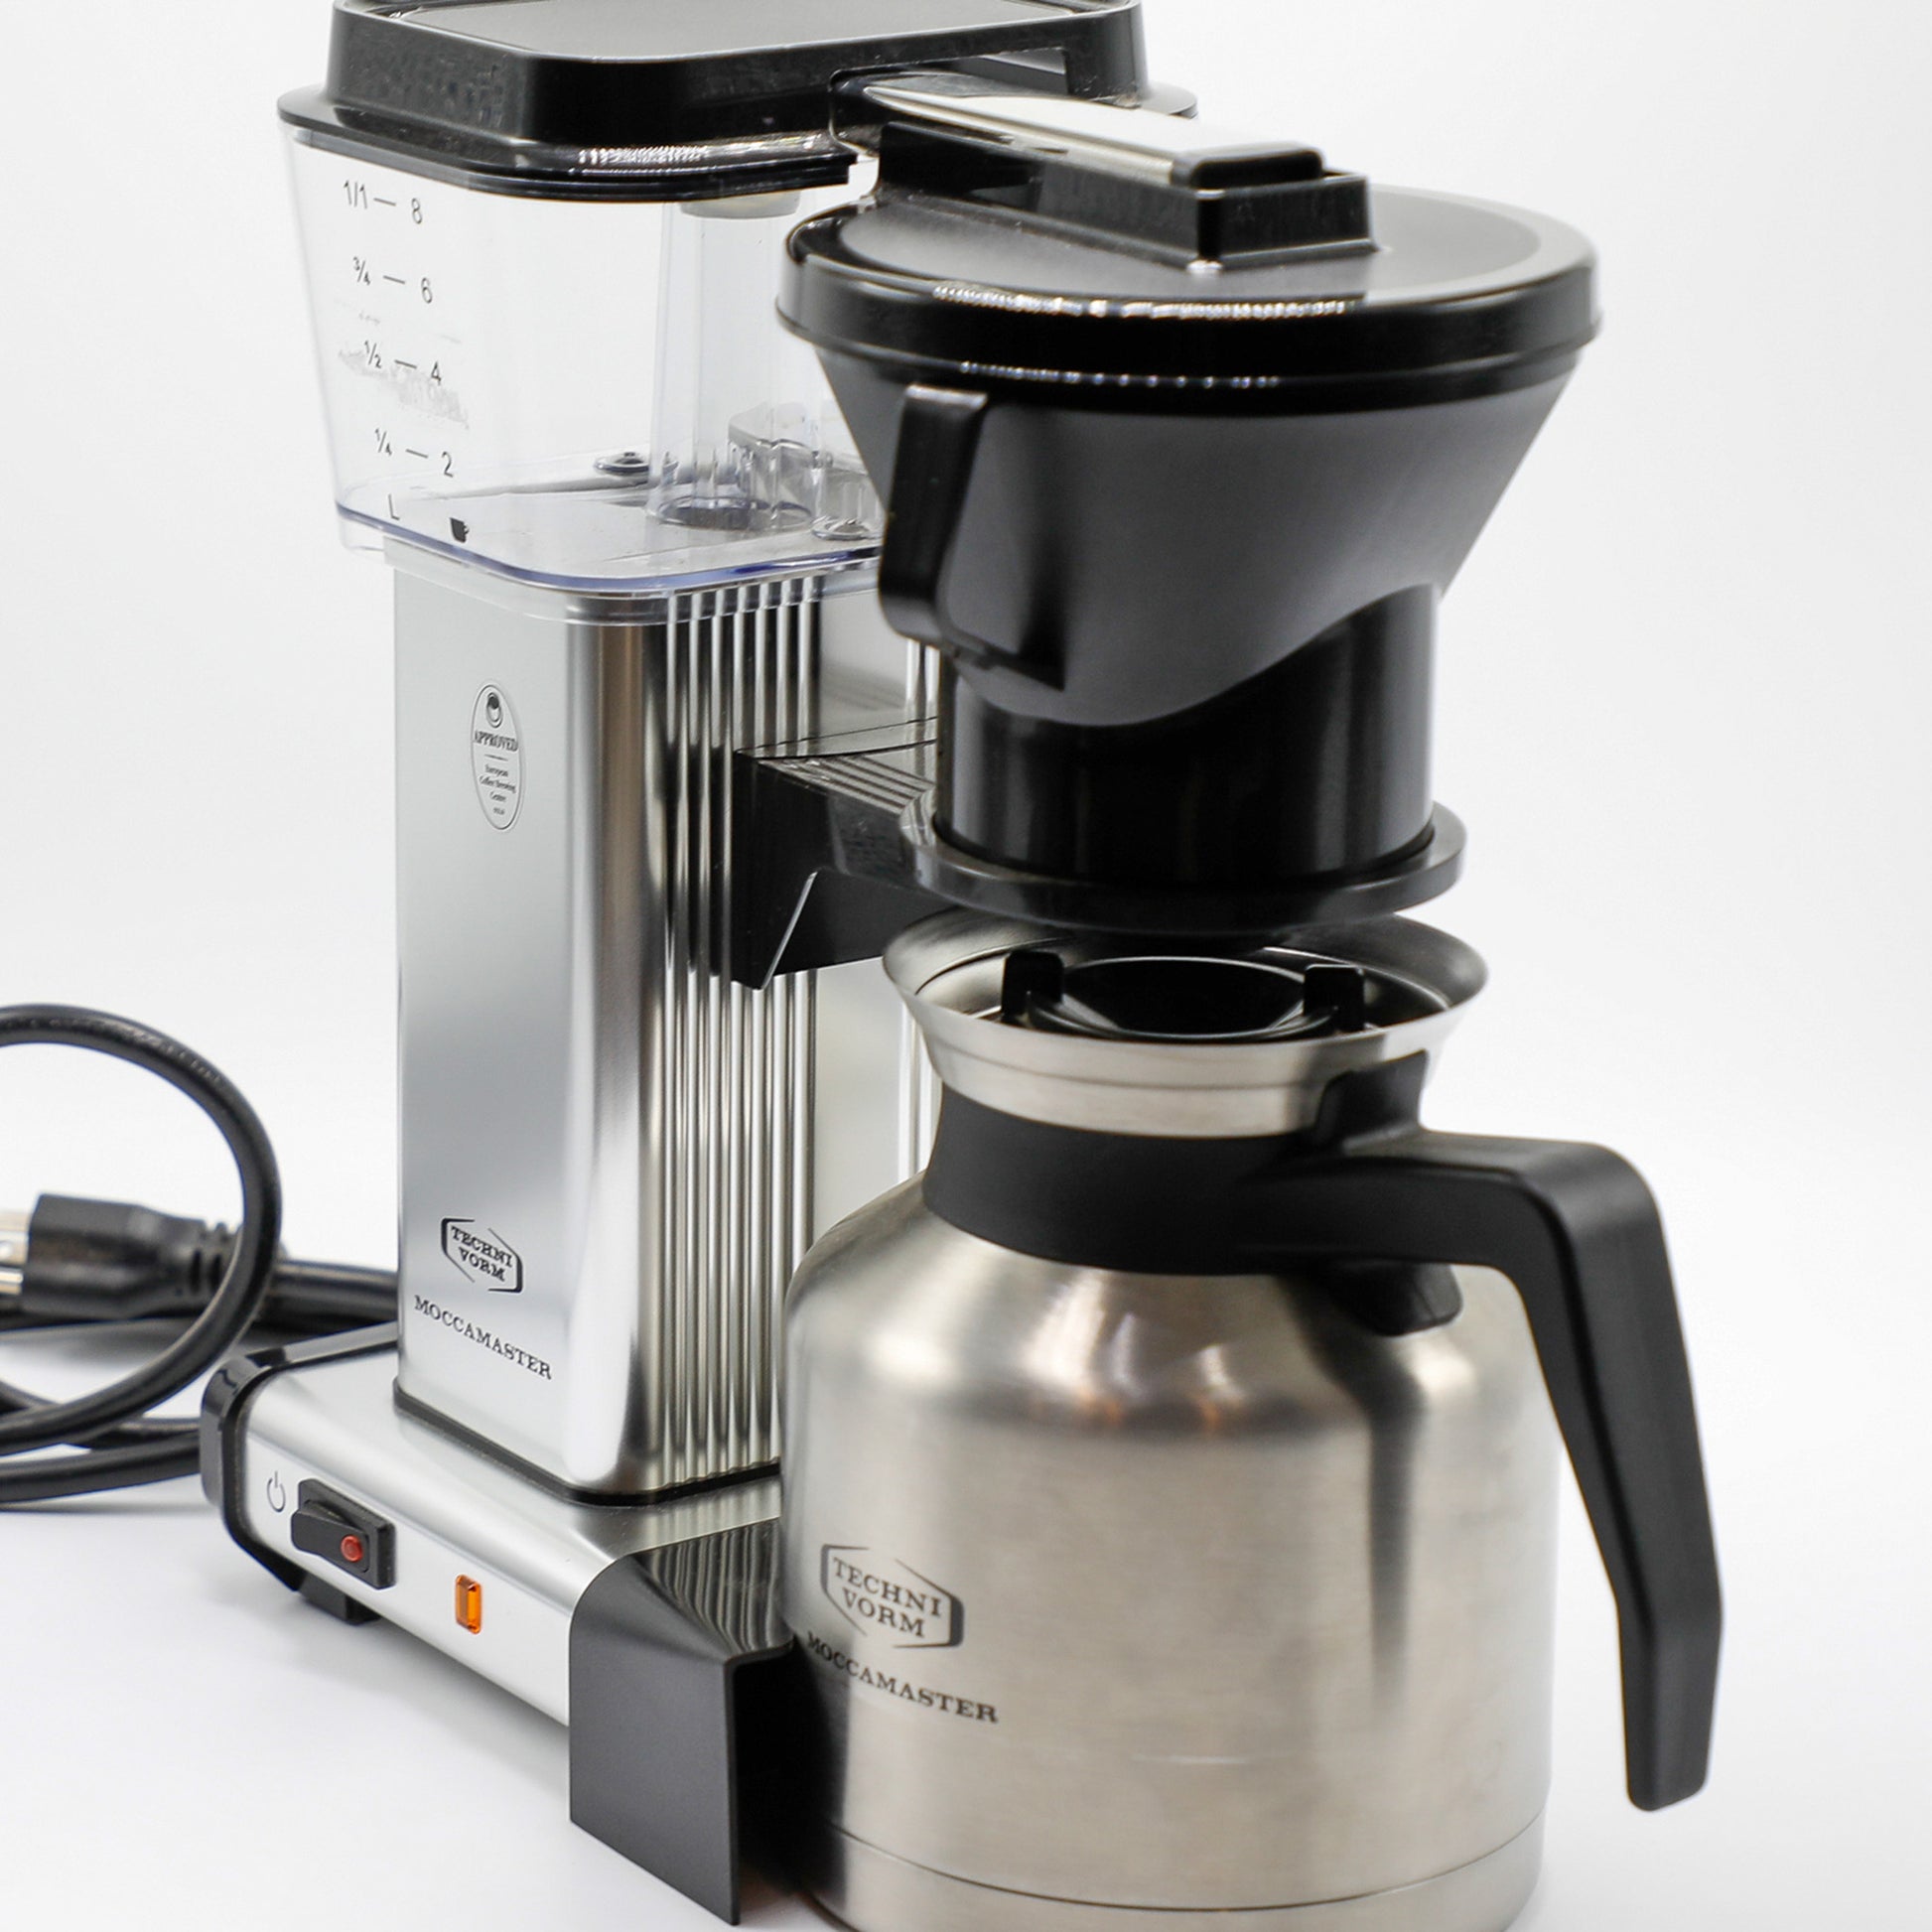 Technivorm Moccamaster KBTS 8-Cup Polished Silver Coffee Maker